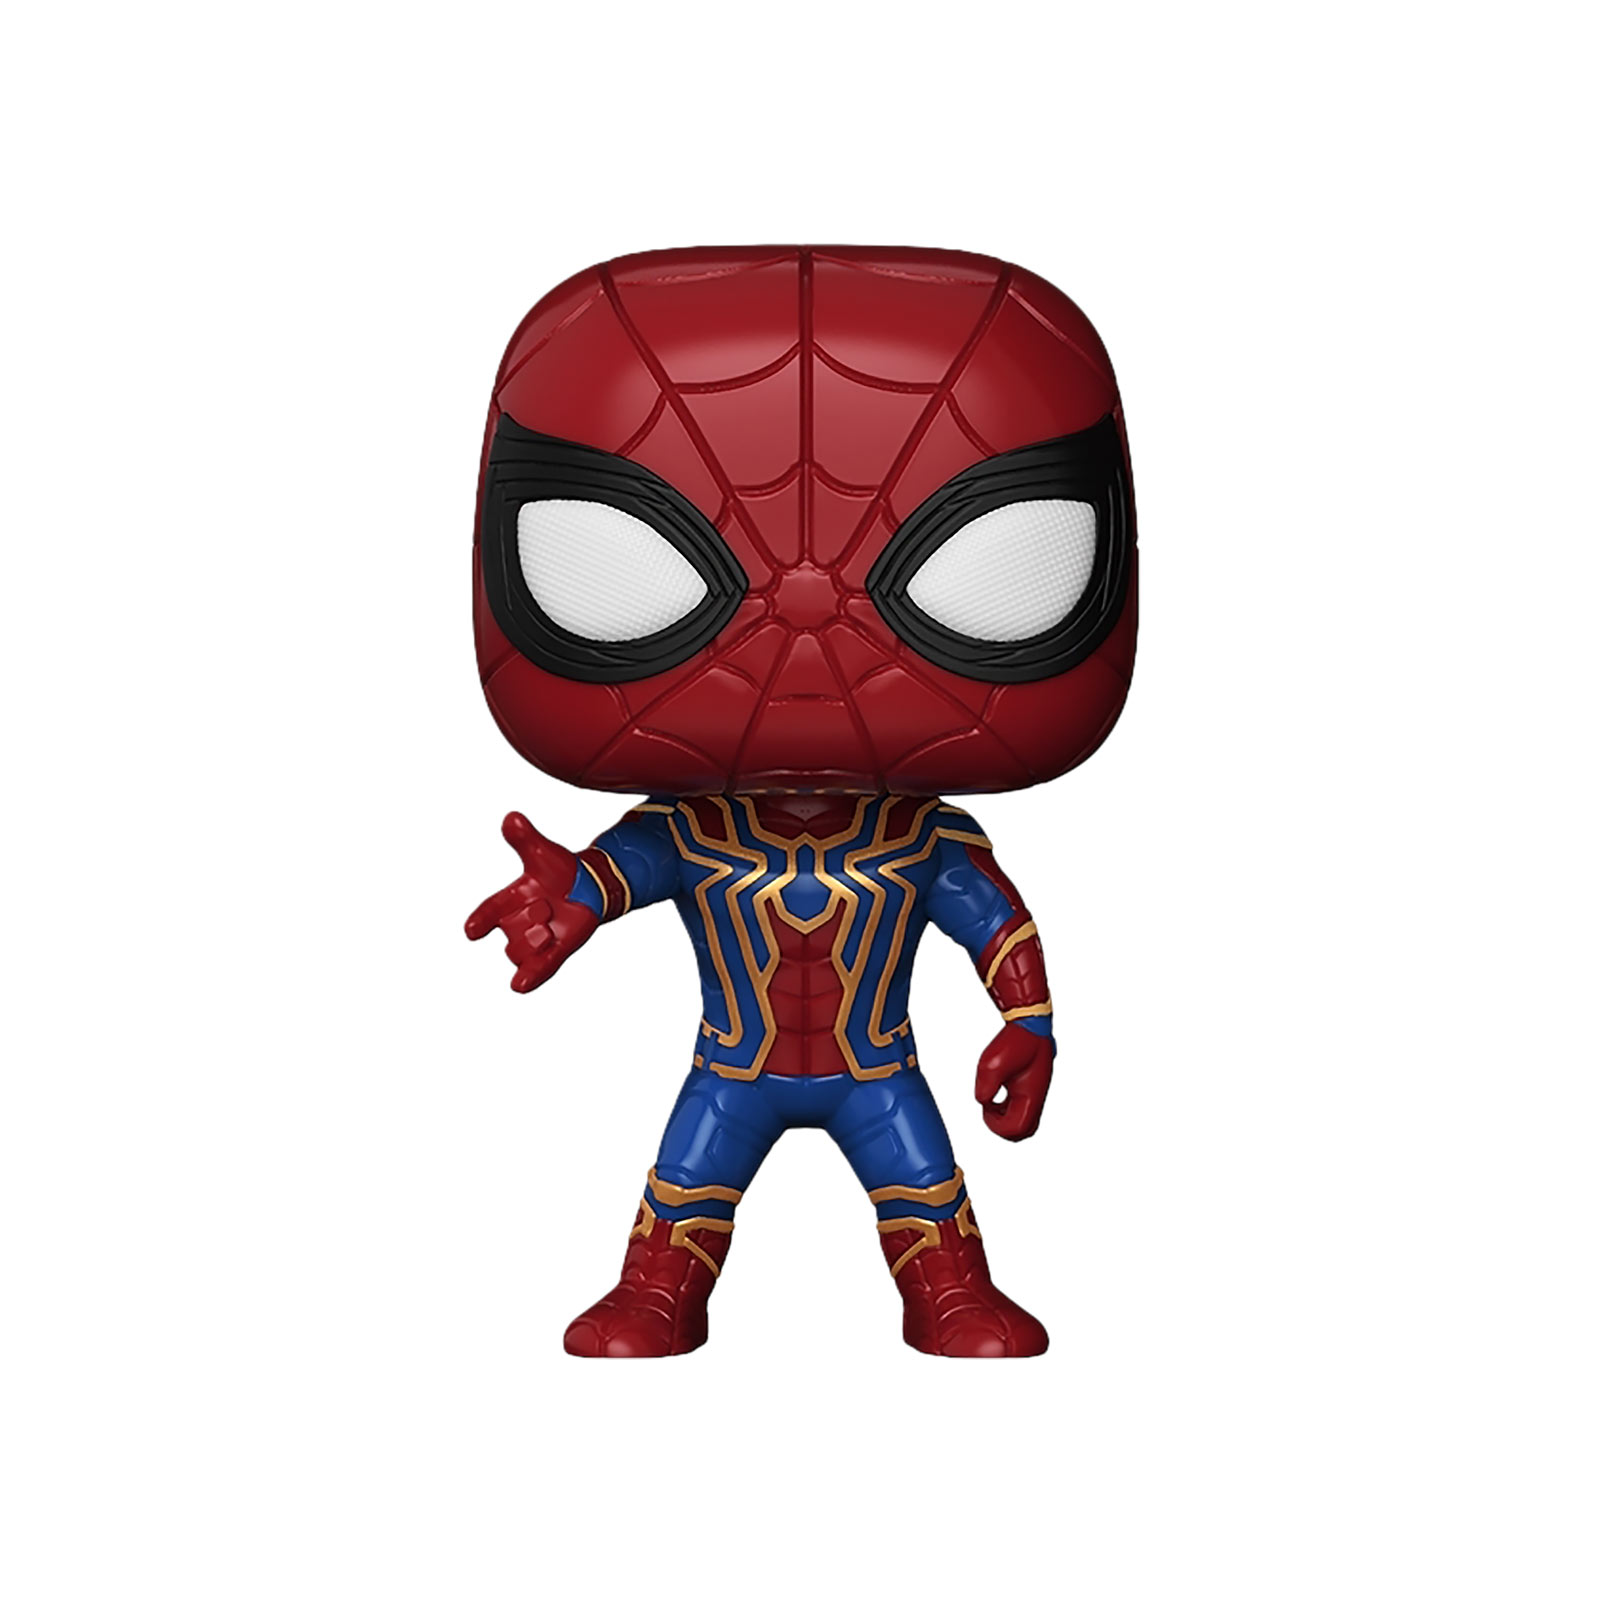 Avengers - Iron Spider Infinity War Funko Pop Bobblehead Figure